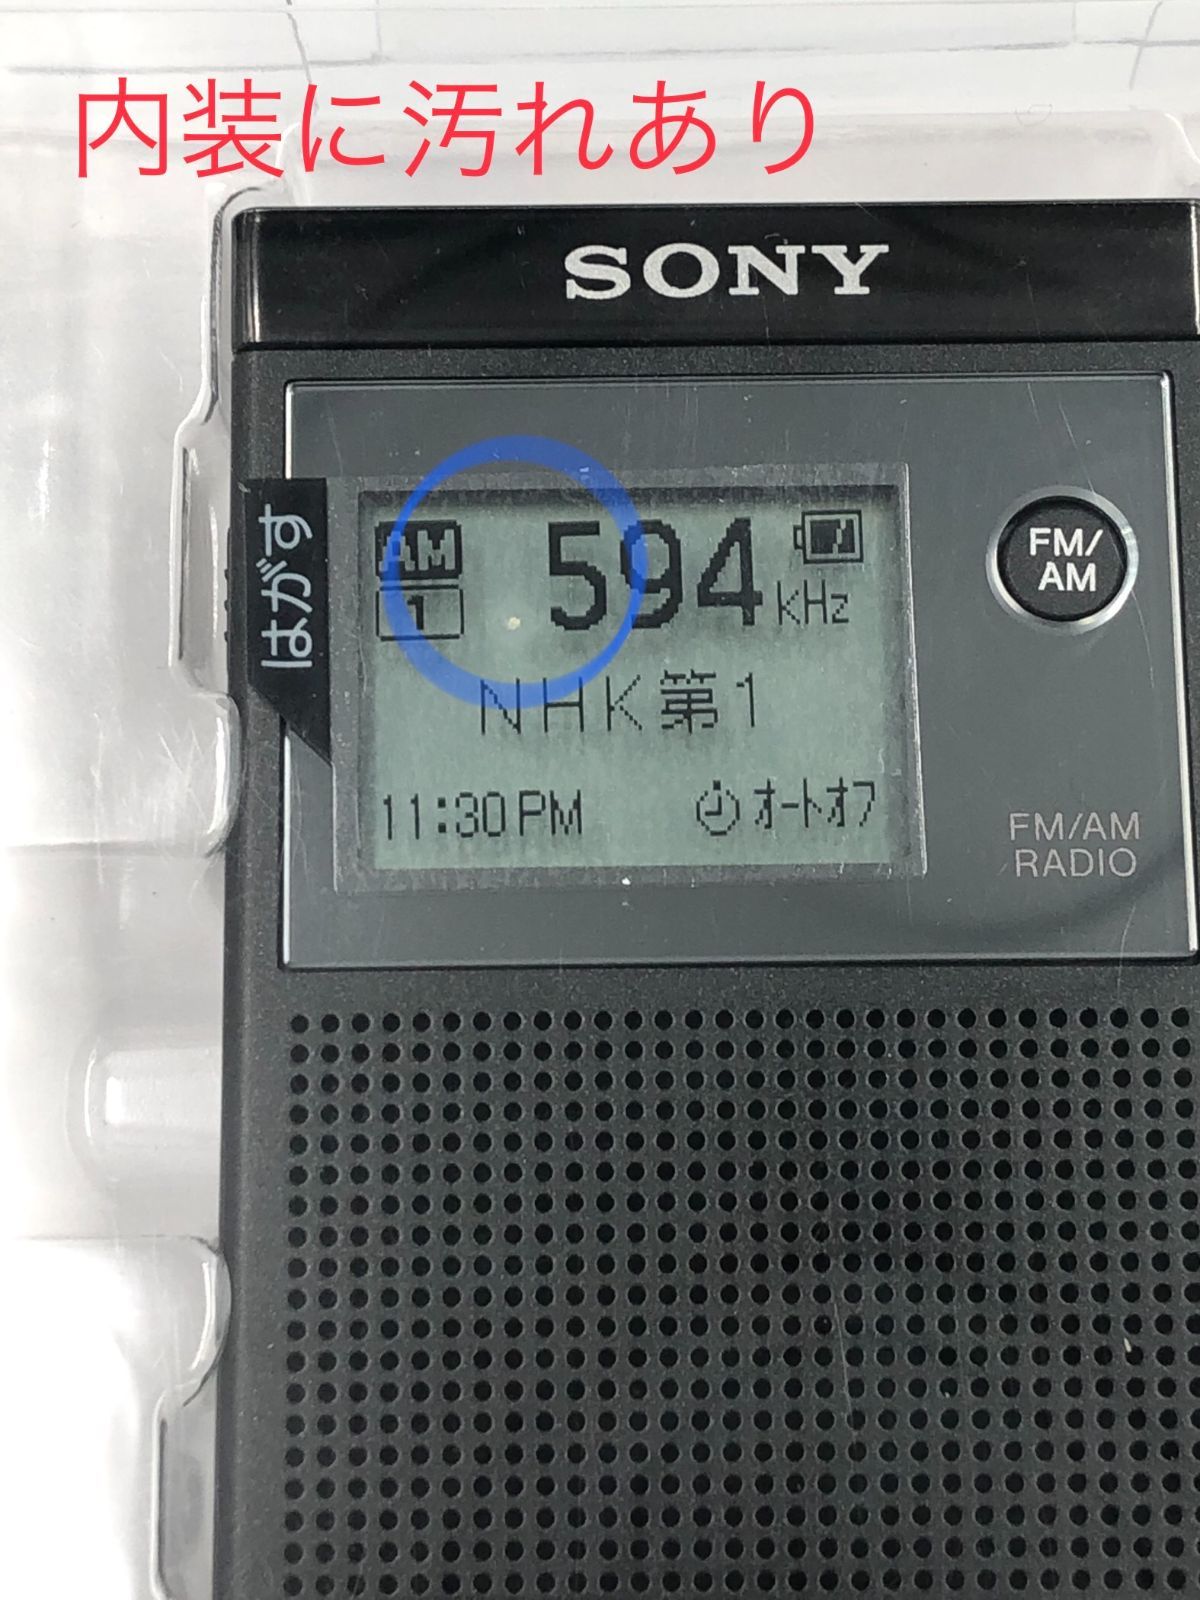 SONY SRF-R356 ポケットラジオ 携帯ラジオ - オーディオ機器